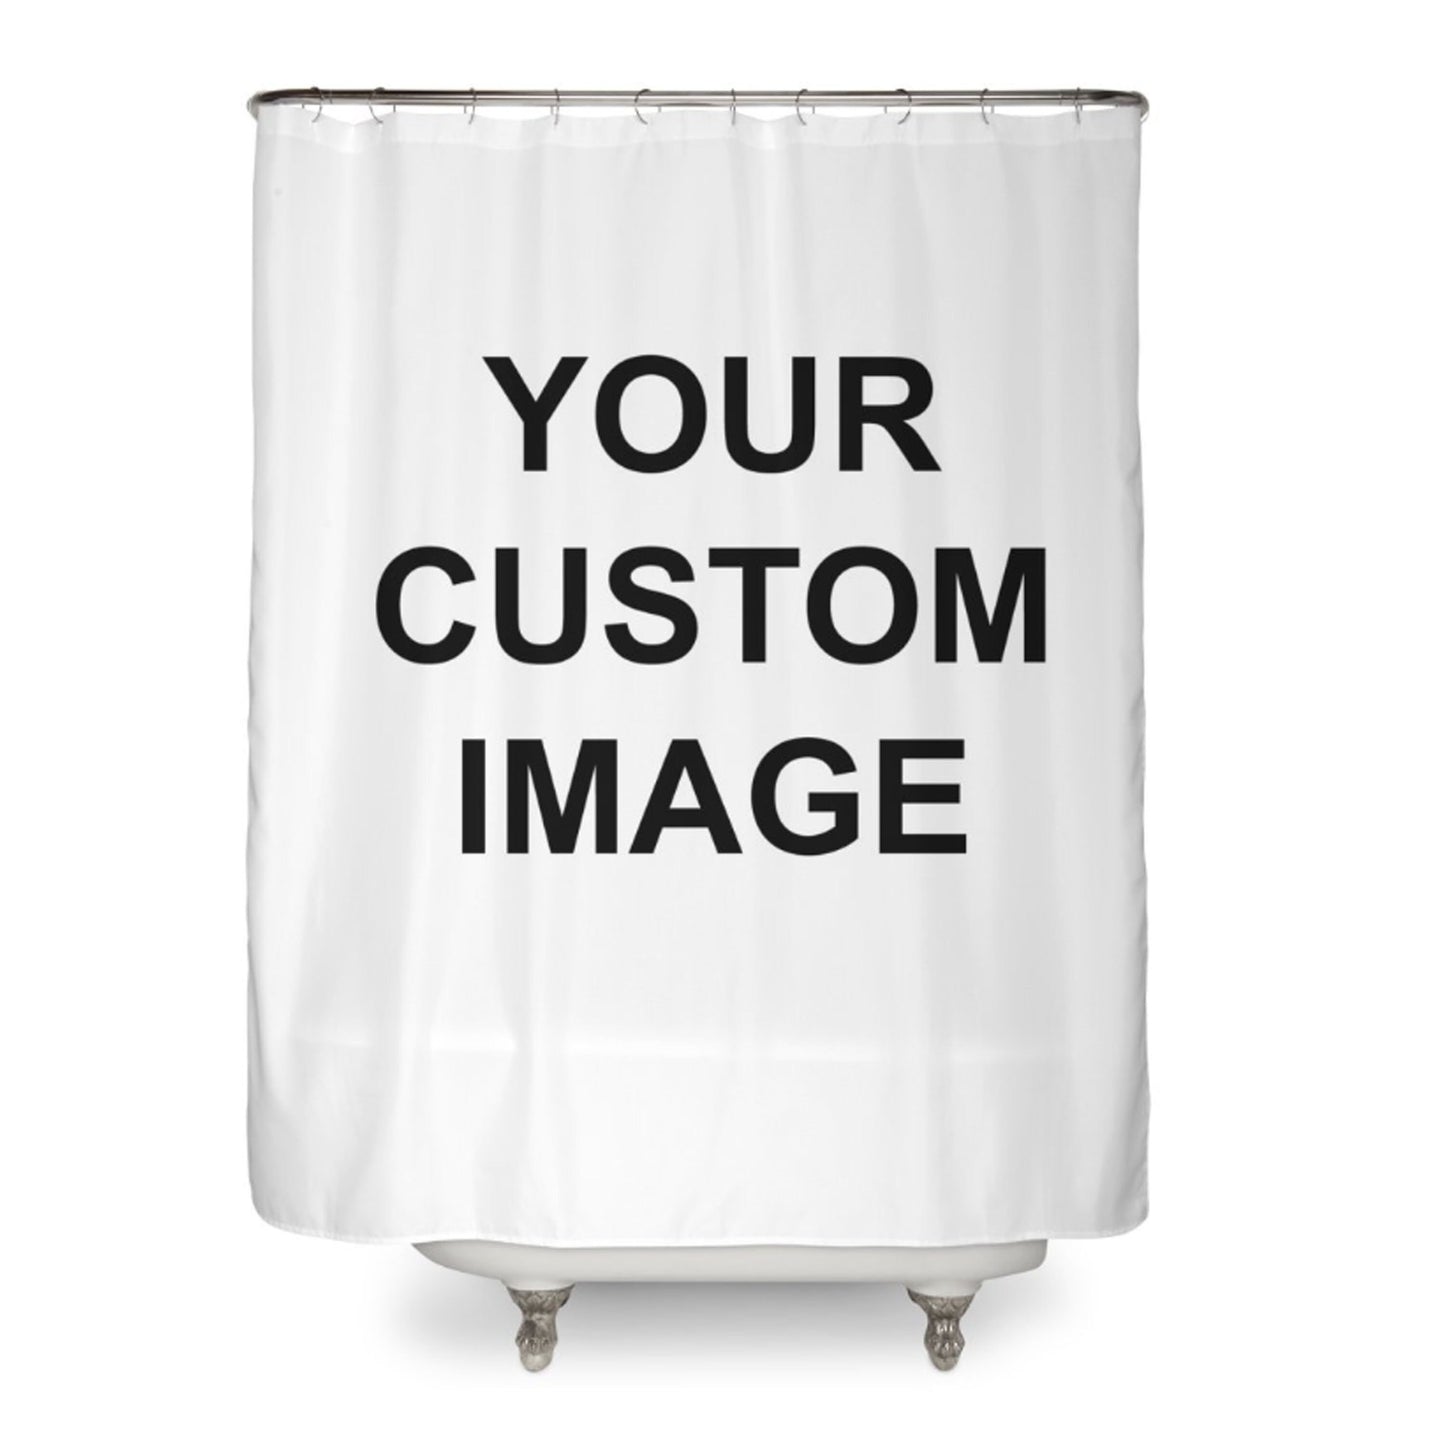 Custom image shower curtain custom shower curtain custom curtain personalized shower curtain custom gift idea unique gift christmas gift